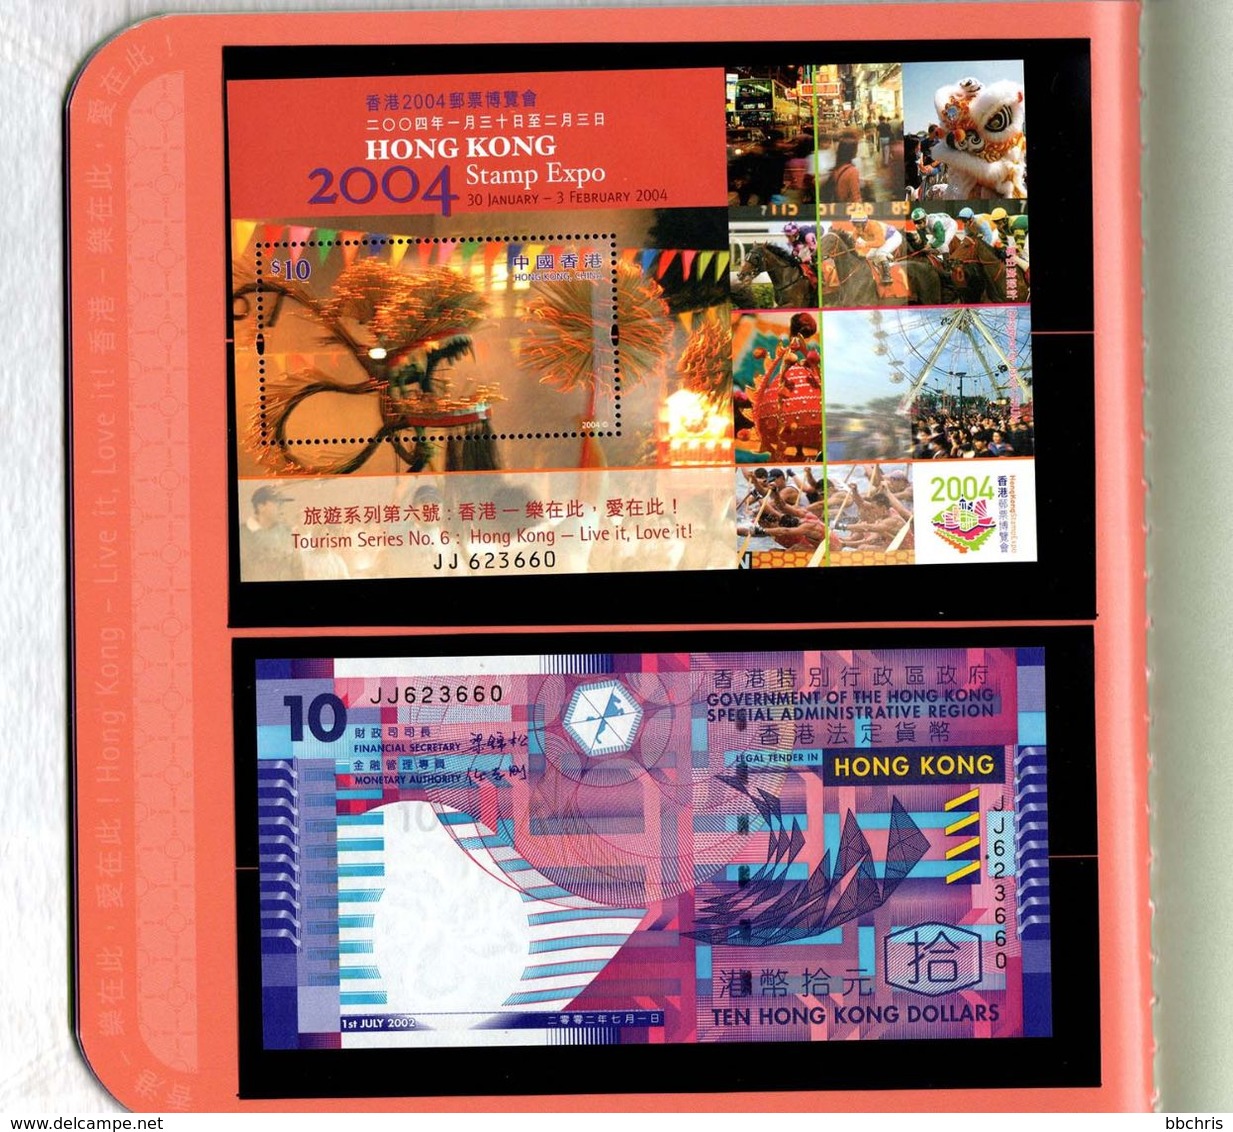 Prestige Collection of Hong Kong 2004 Stamp Sheetlets & Banknotes Numbered Sheets matching with banknotes MNH